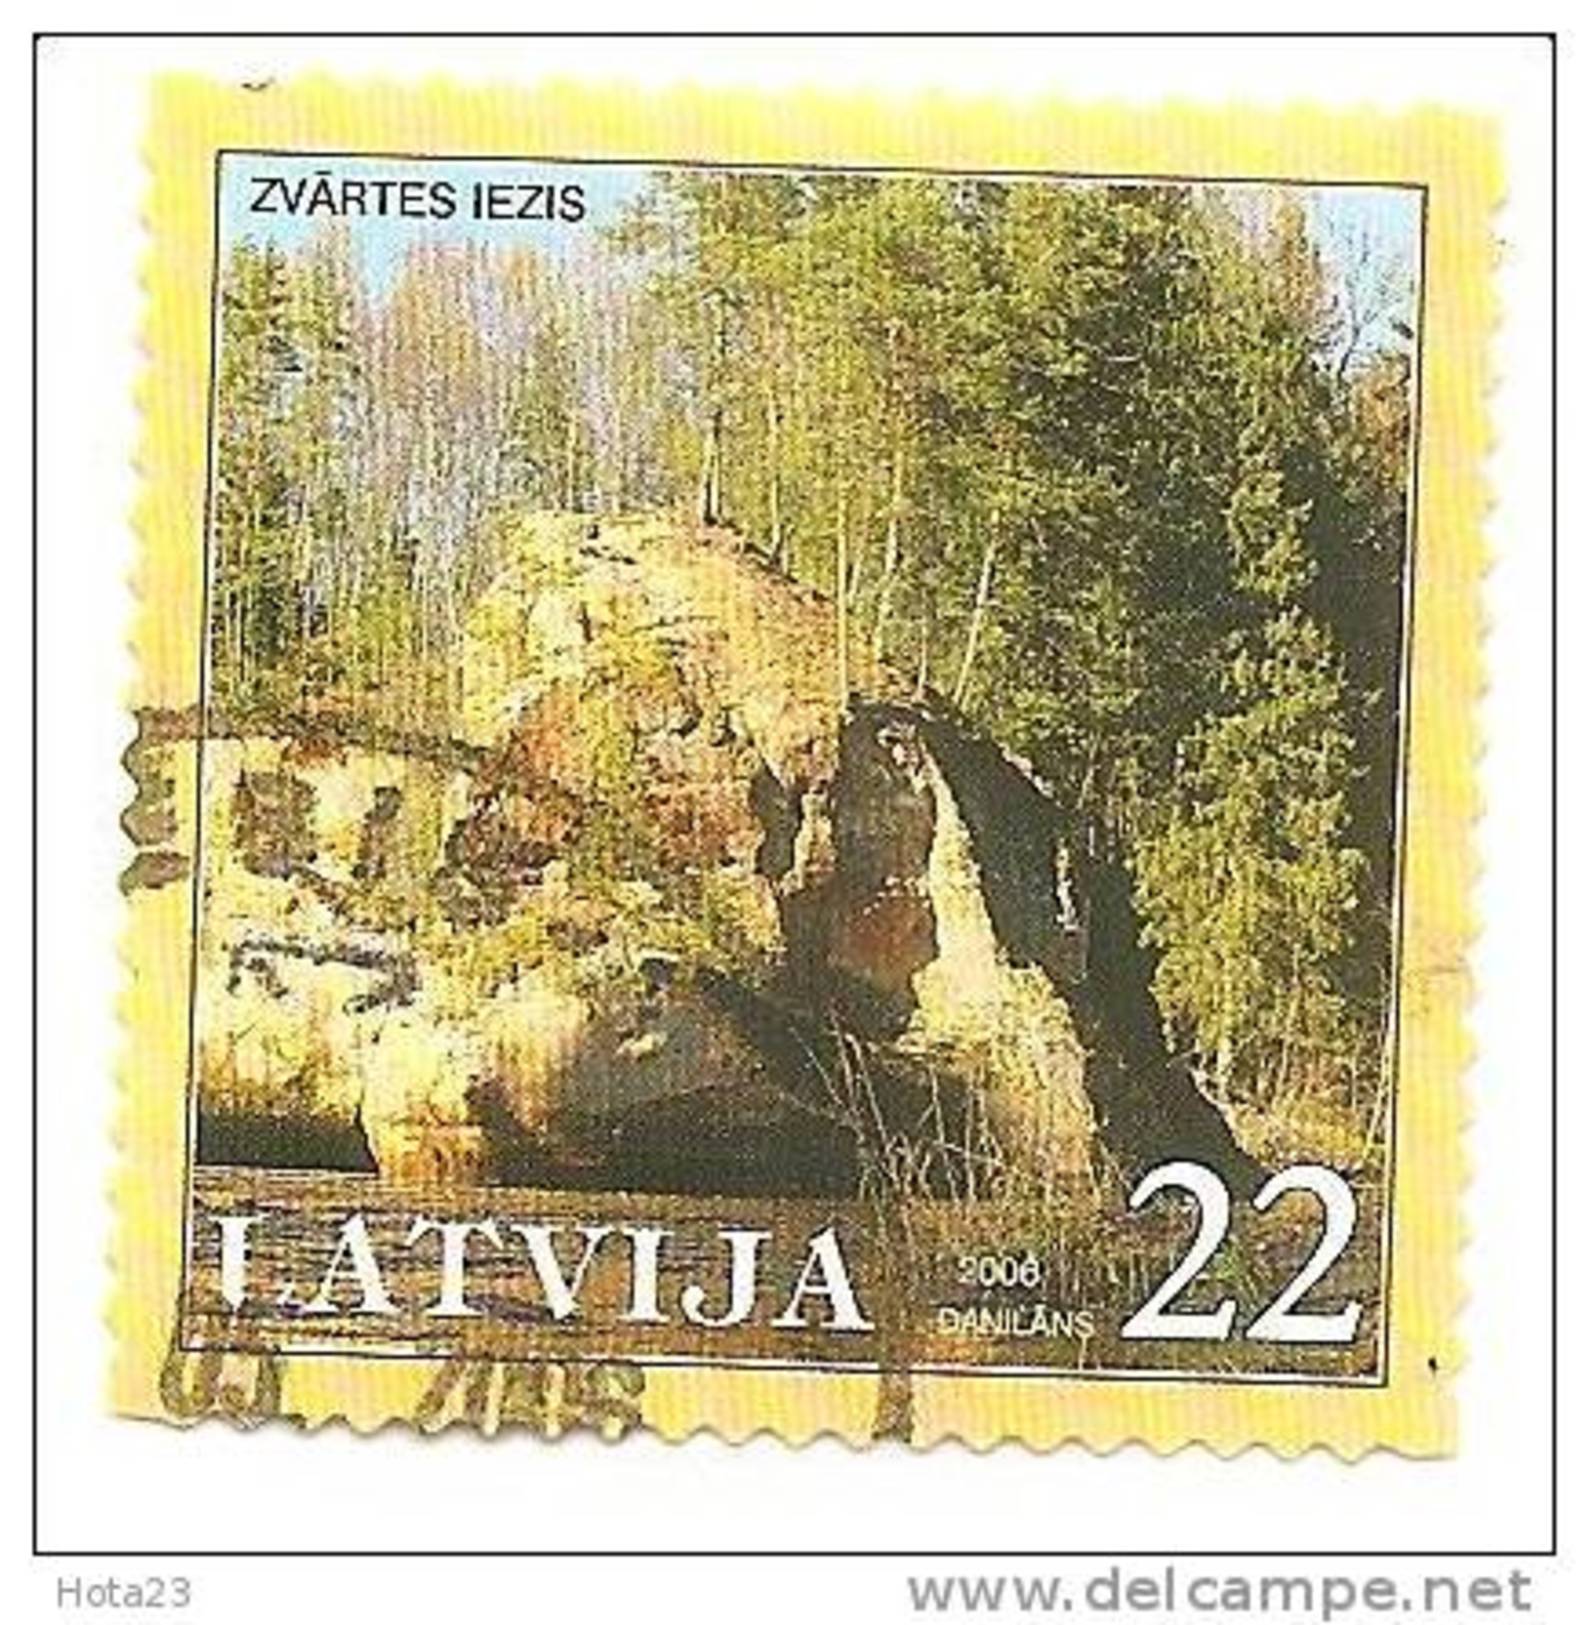 Latvia -2006 ROCK - "ZVARTA" -- Used (0) - Letonia